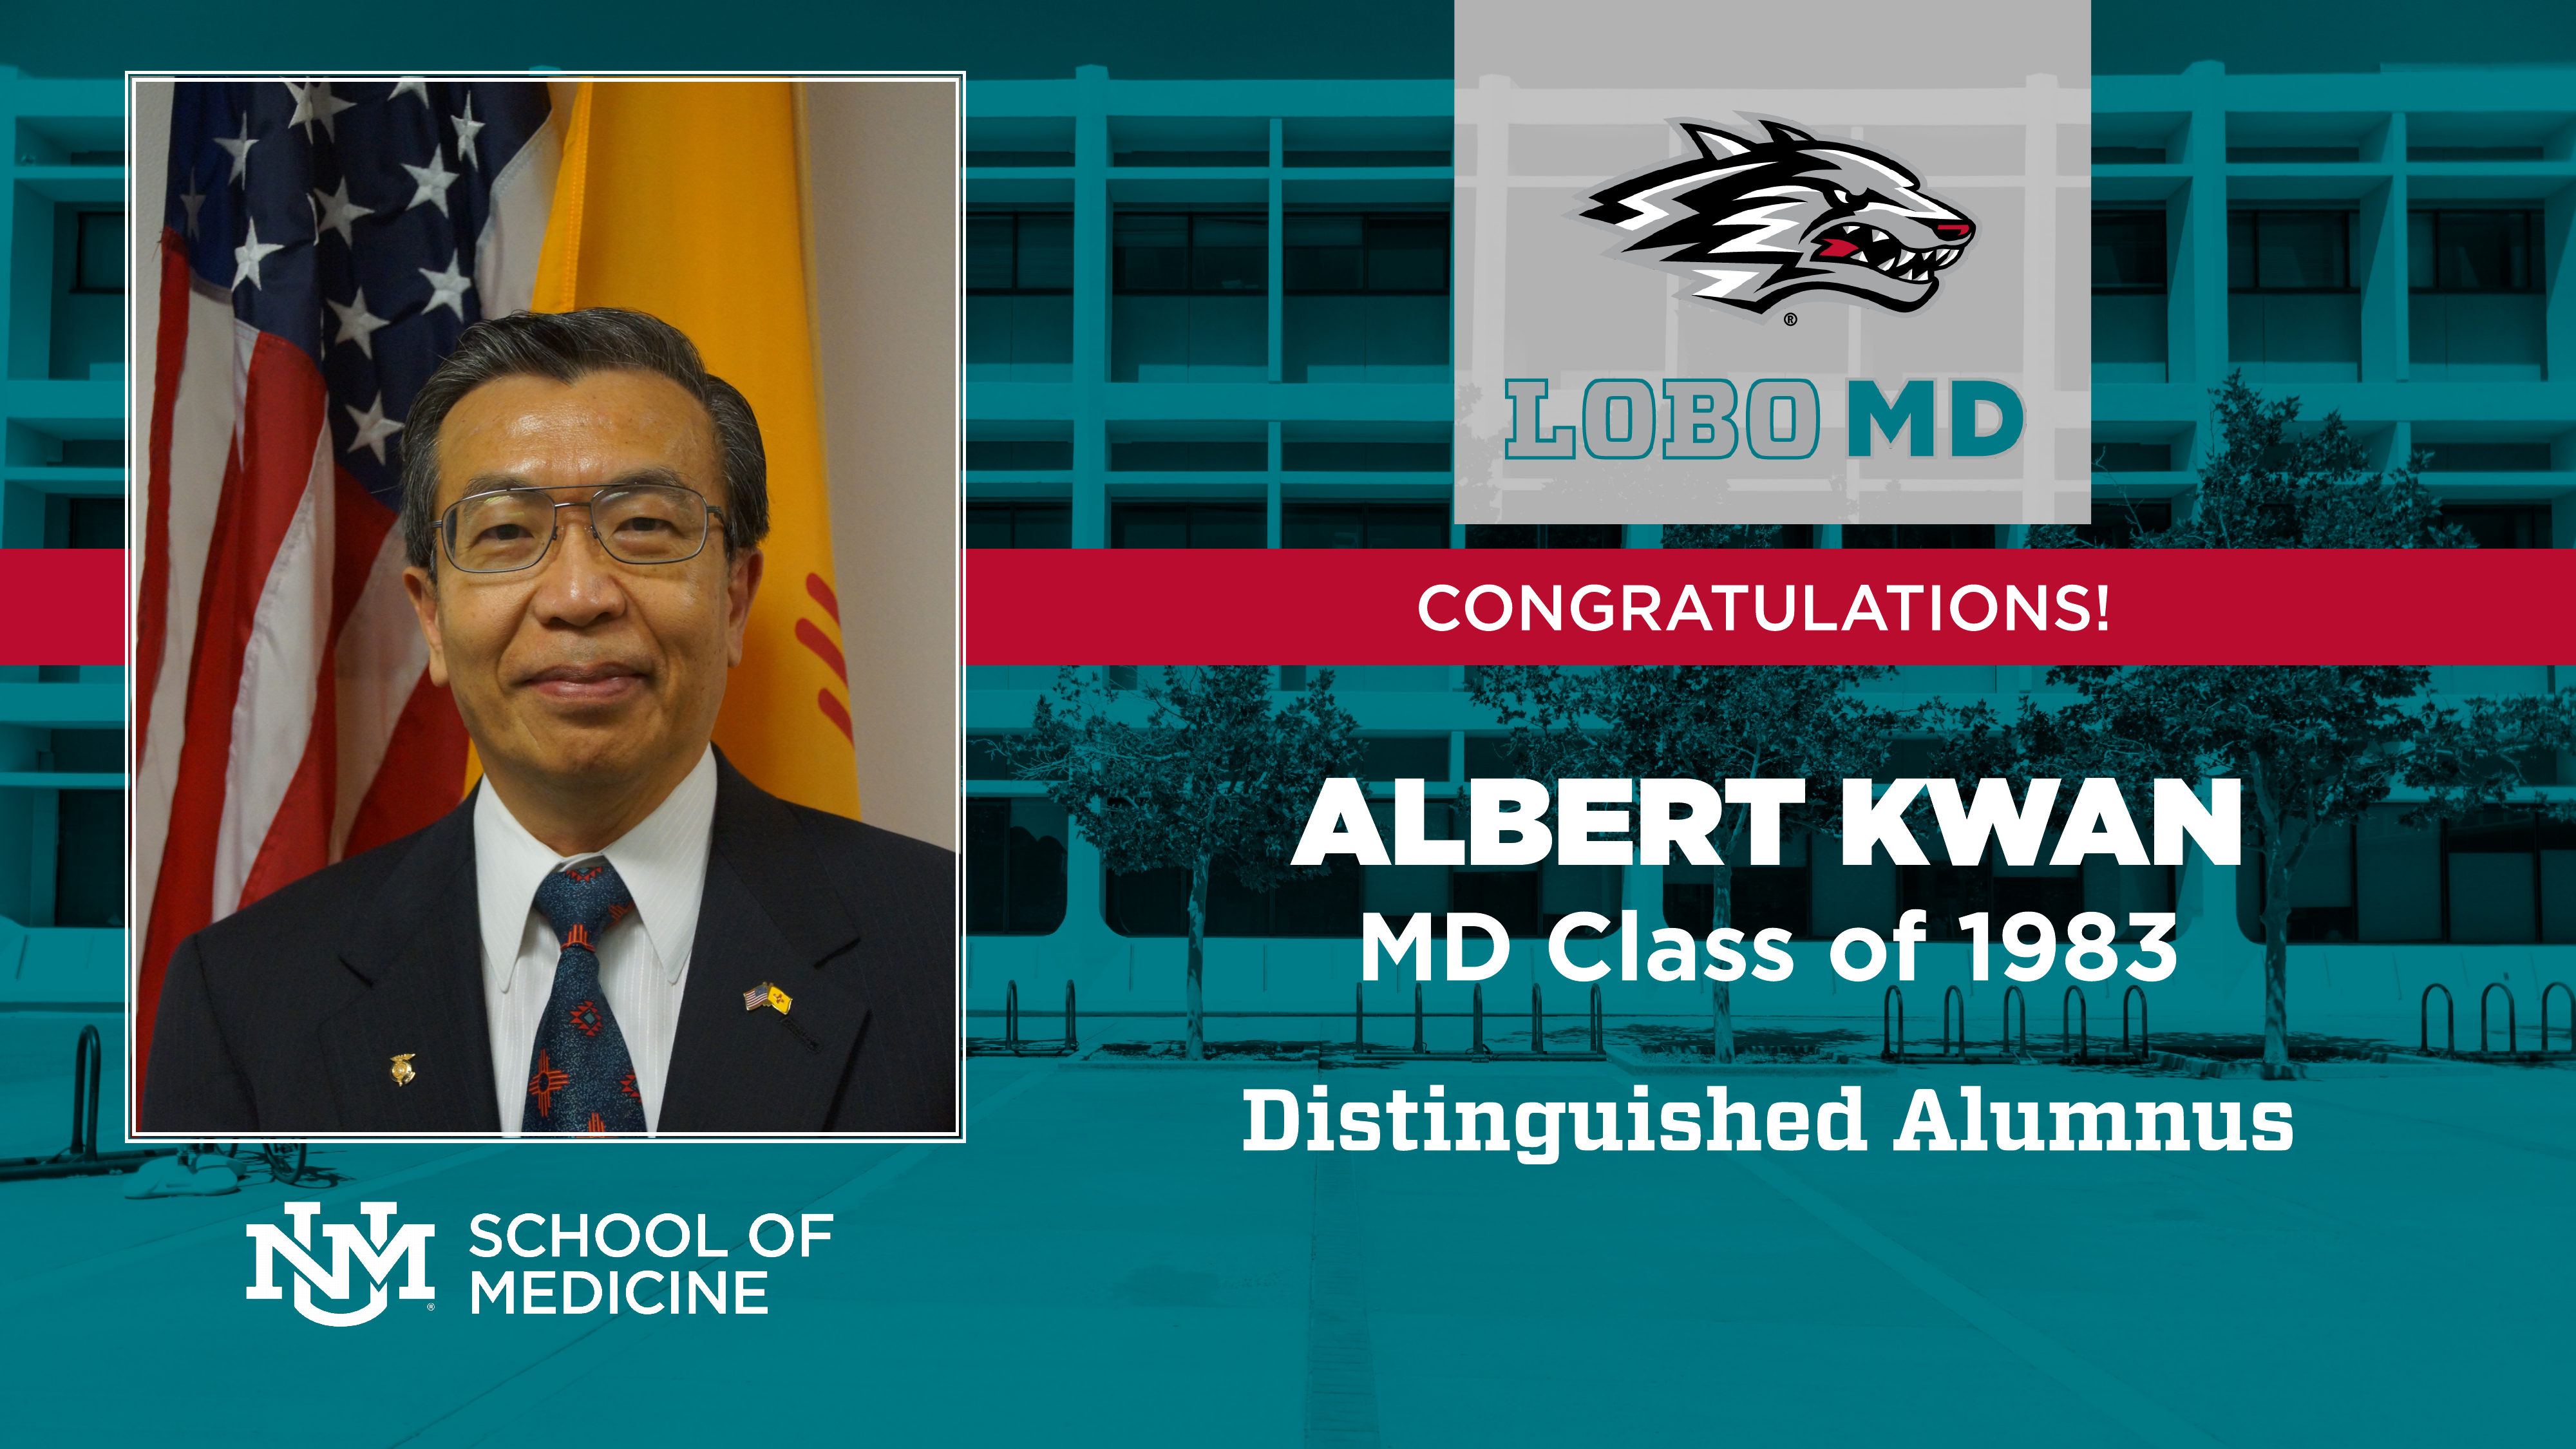 Dr. Alberto Kwan